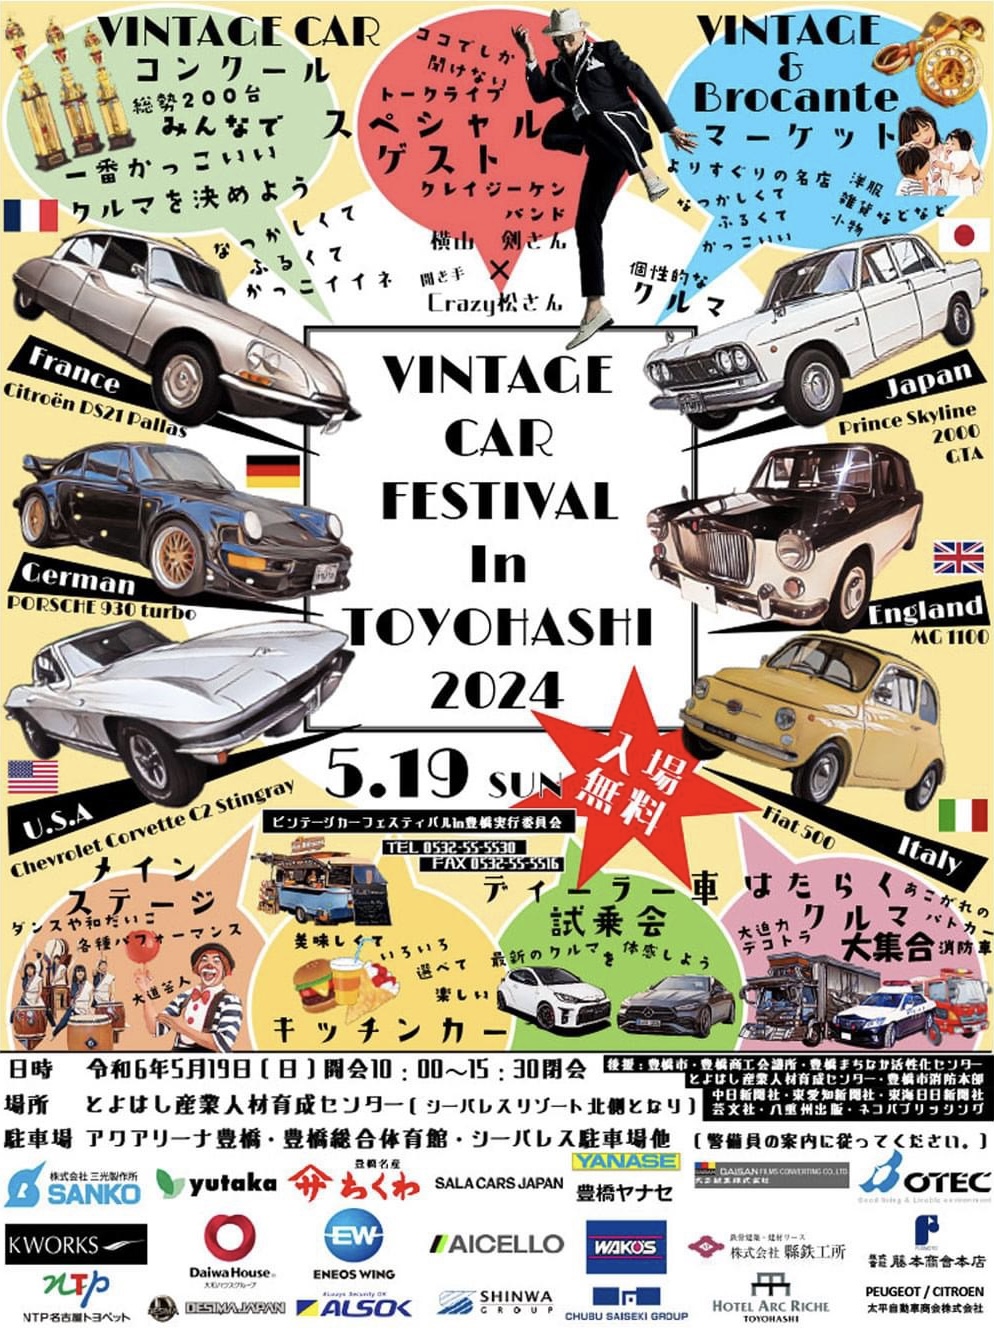 ◇ VINTAGE CAR FESTIVAL in TOYOHASHI 2024◇